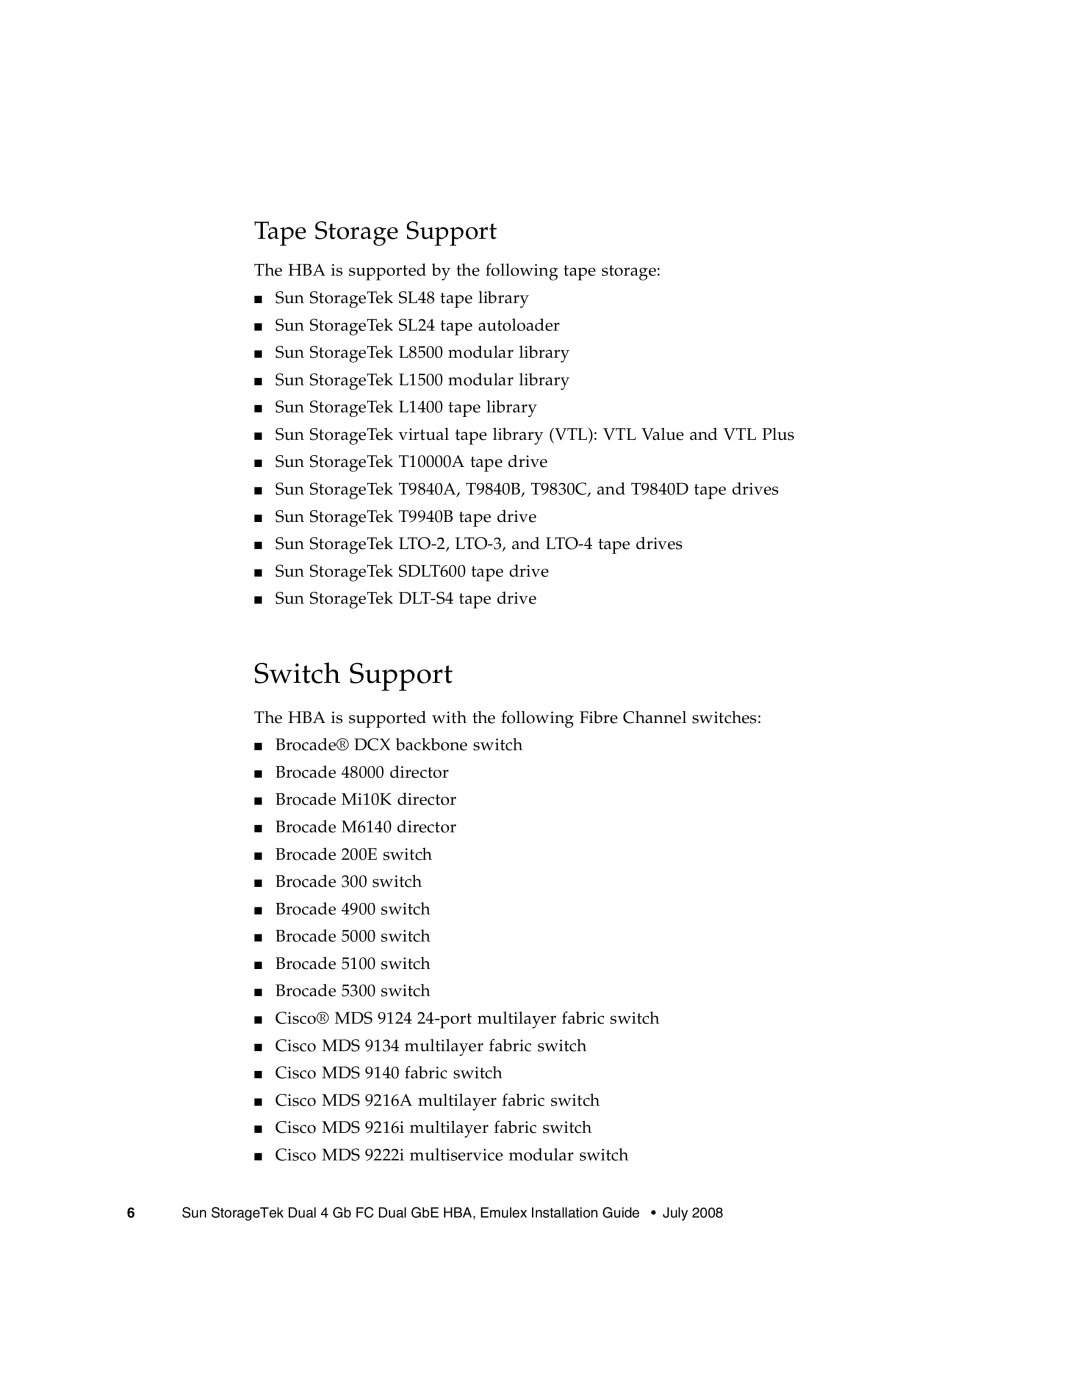 Sun Microsystems SG-XPCIE2FCGBE-E-Z manual Switch Support, Tape Storage Support 